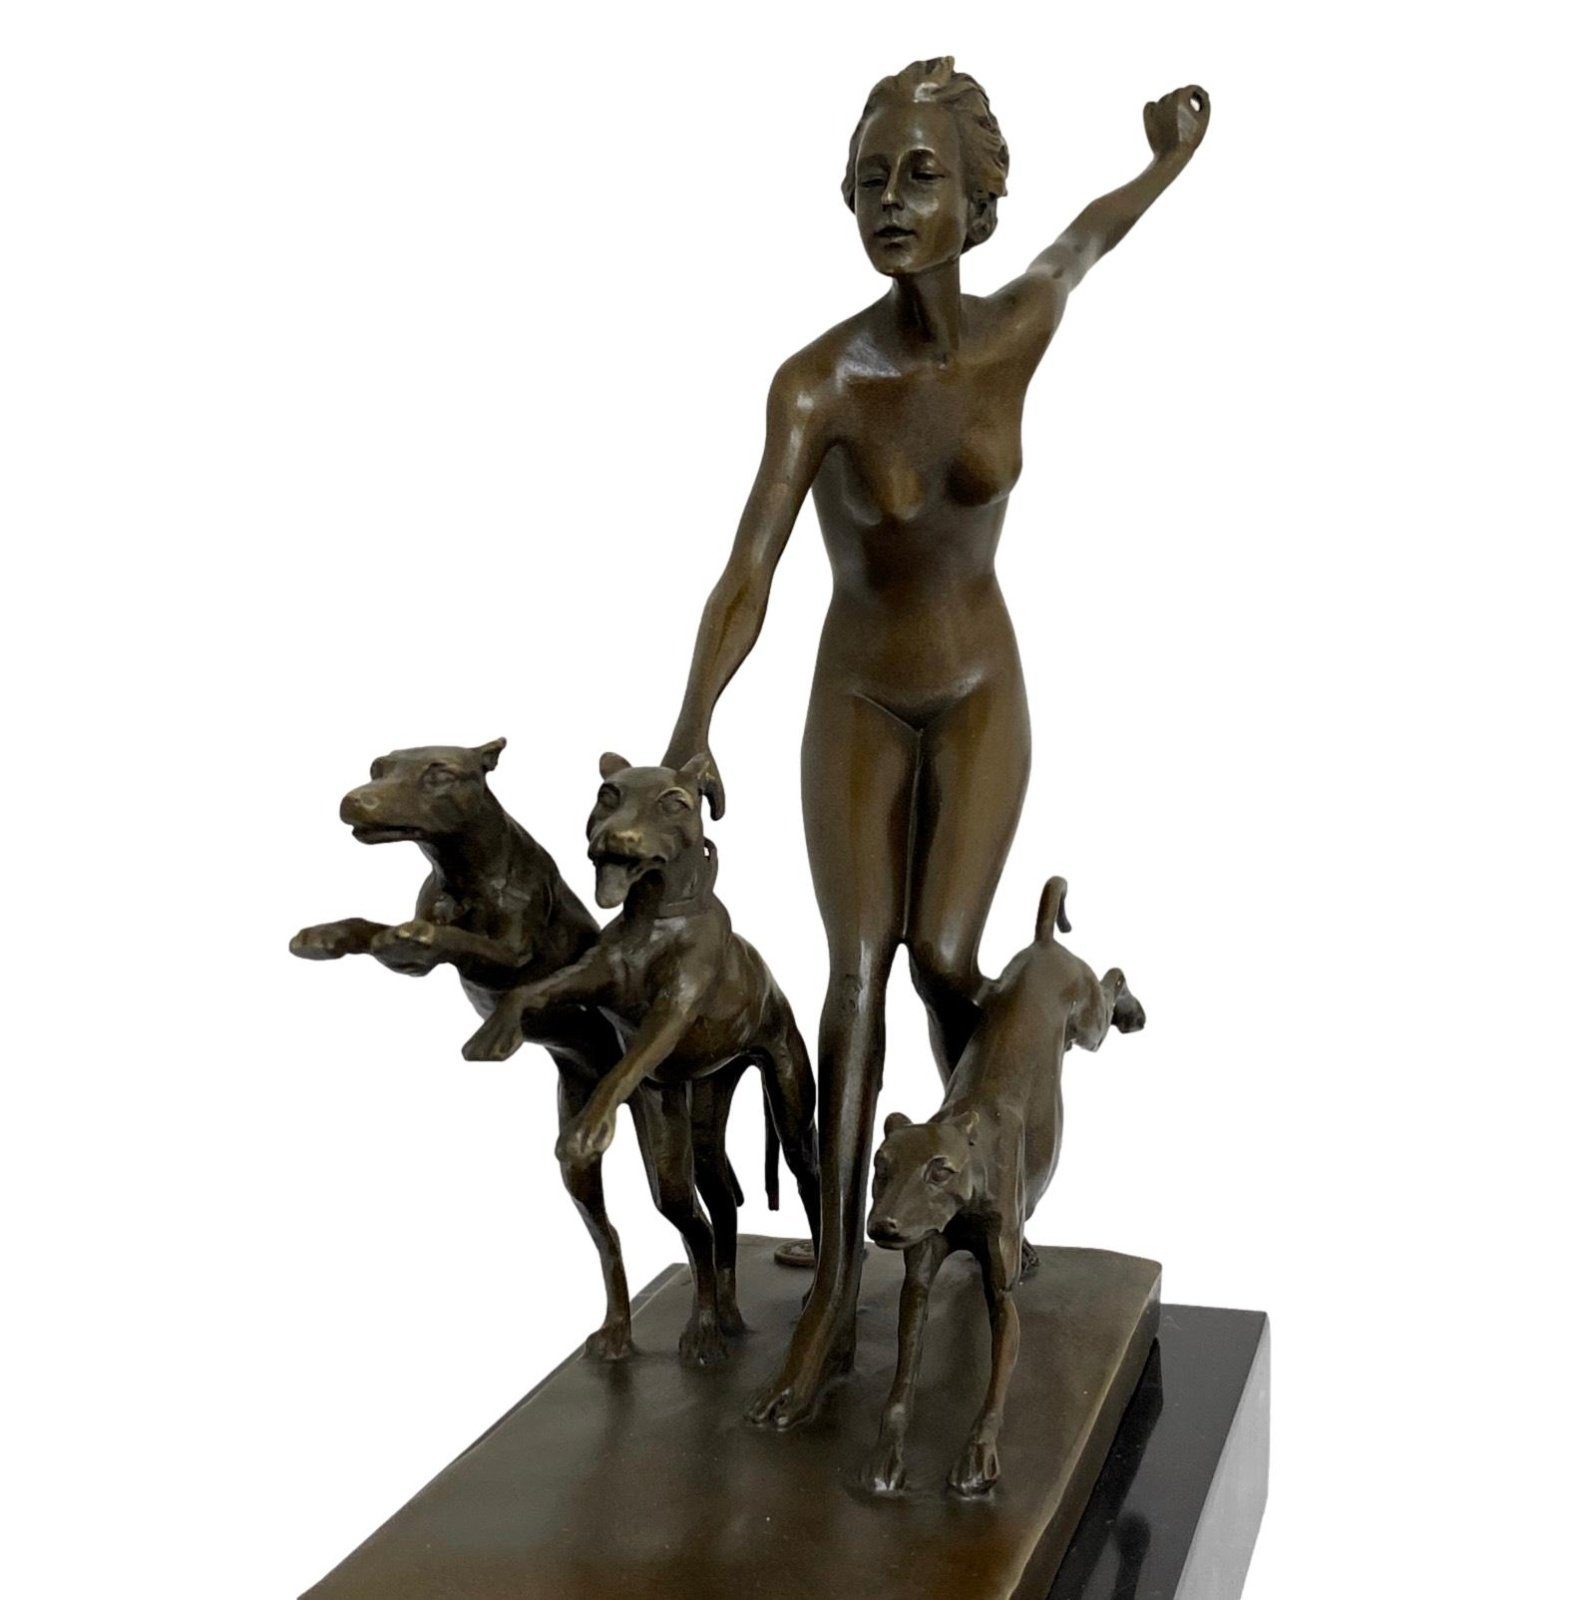 Aubaho Skulptur Replik Göttin Figur Antik-Stil Diana Lorenzl Bronzeskulptur nach Hund